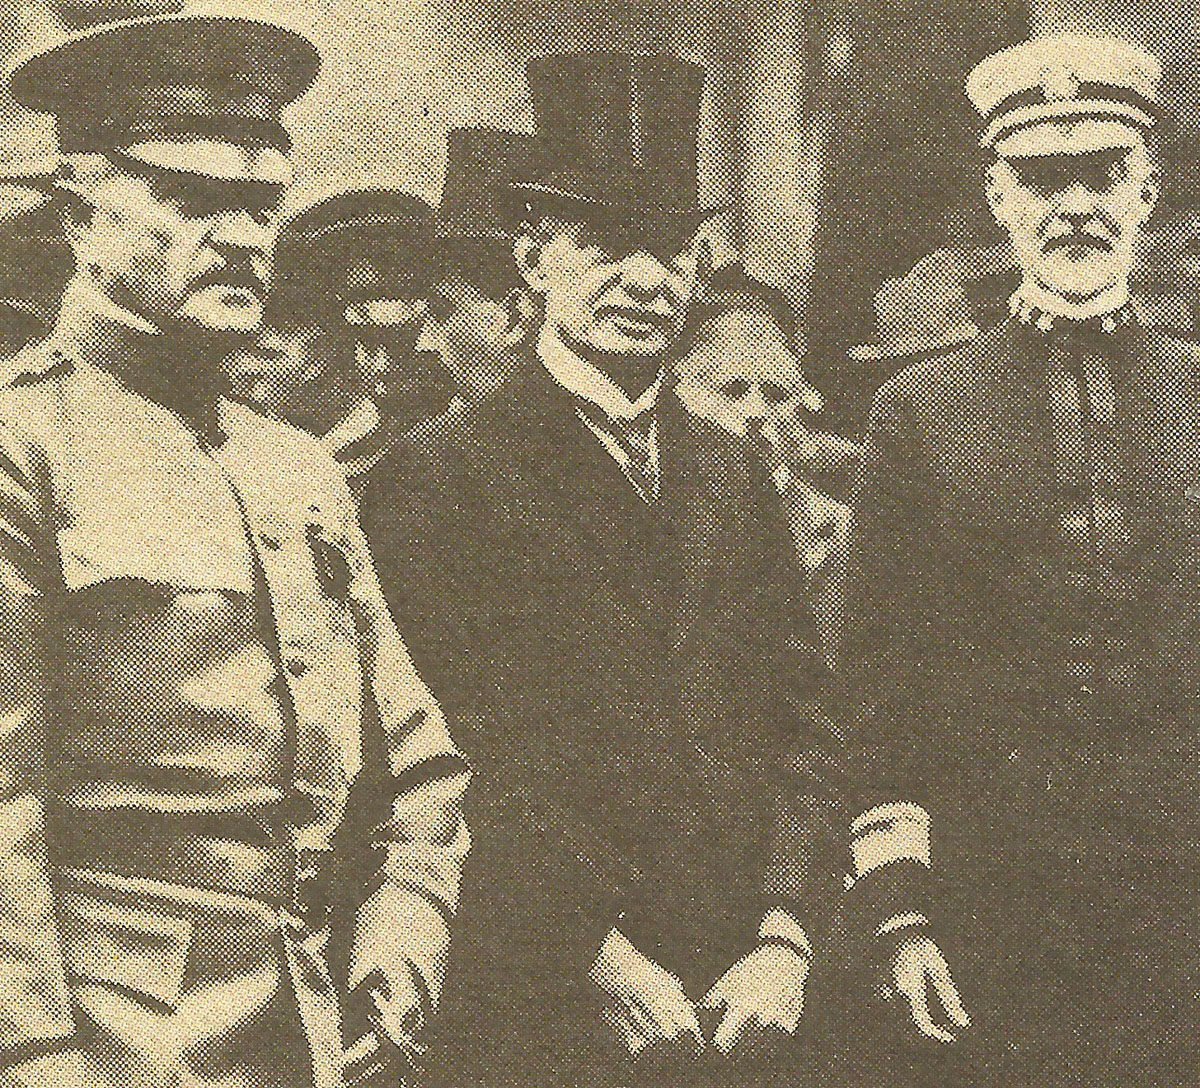 General Pershing und Admiral Sims